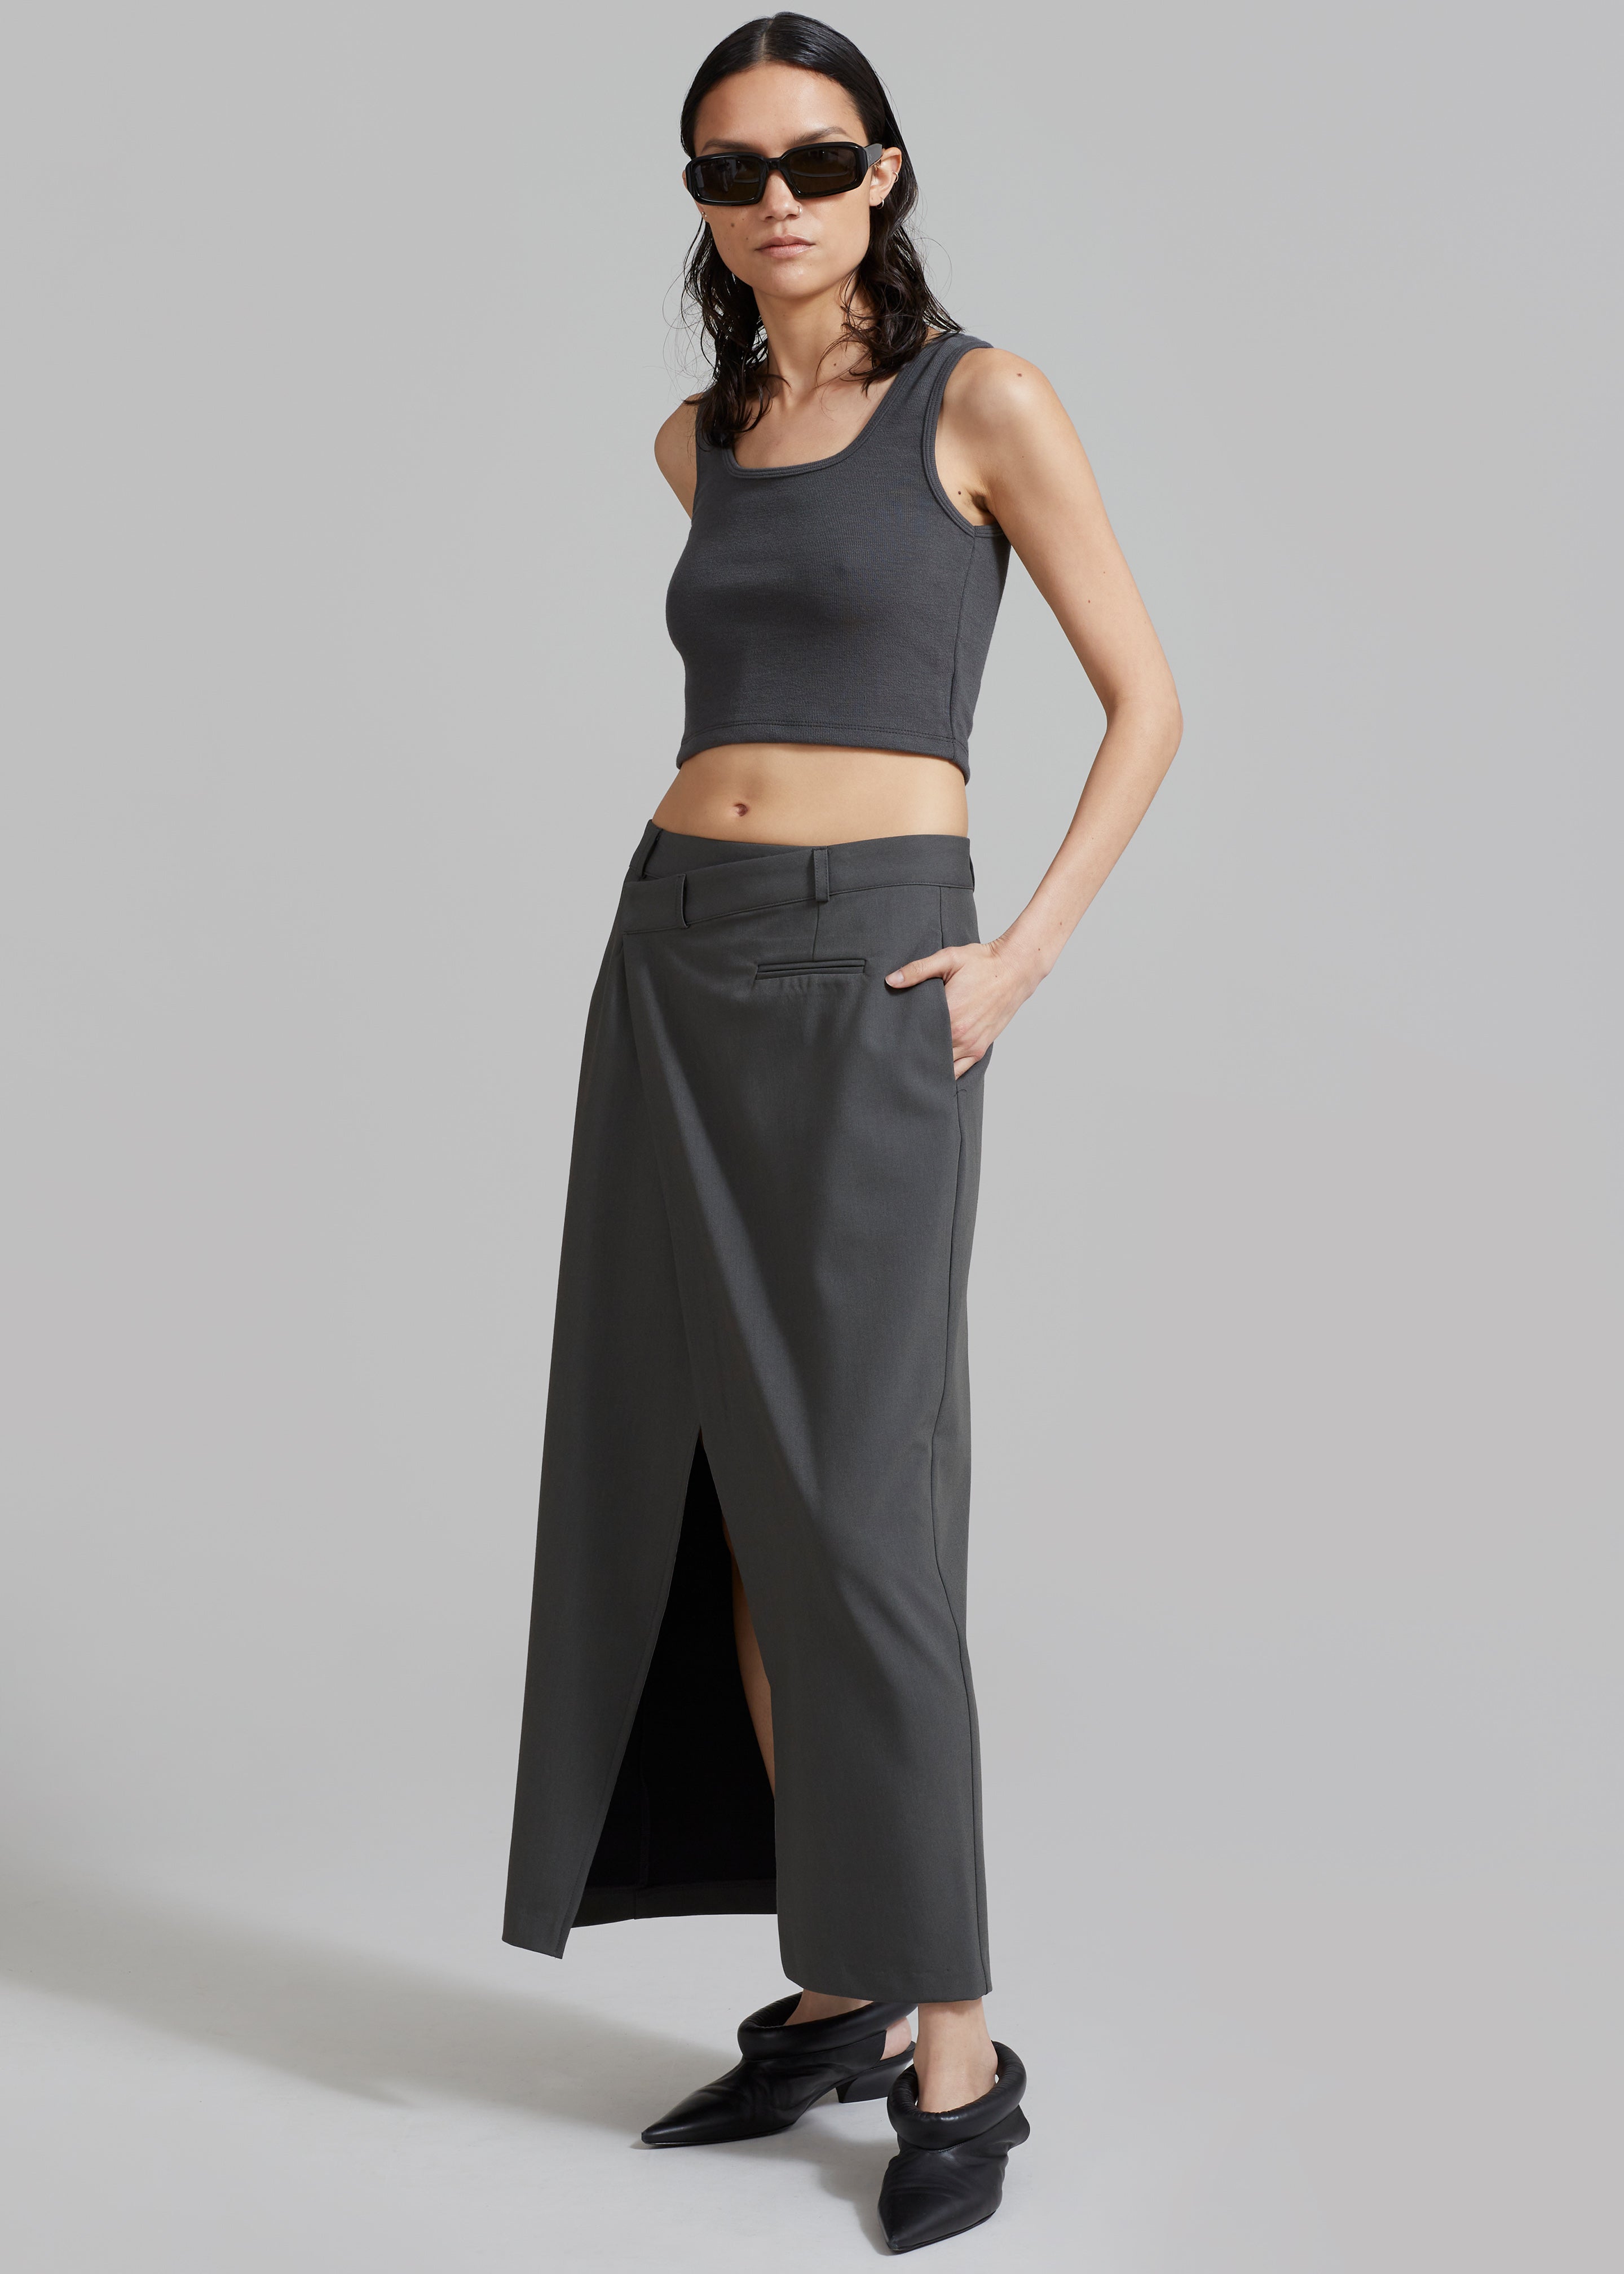 Annabel Asymmetric Midi Skirt - Grey - 5